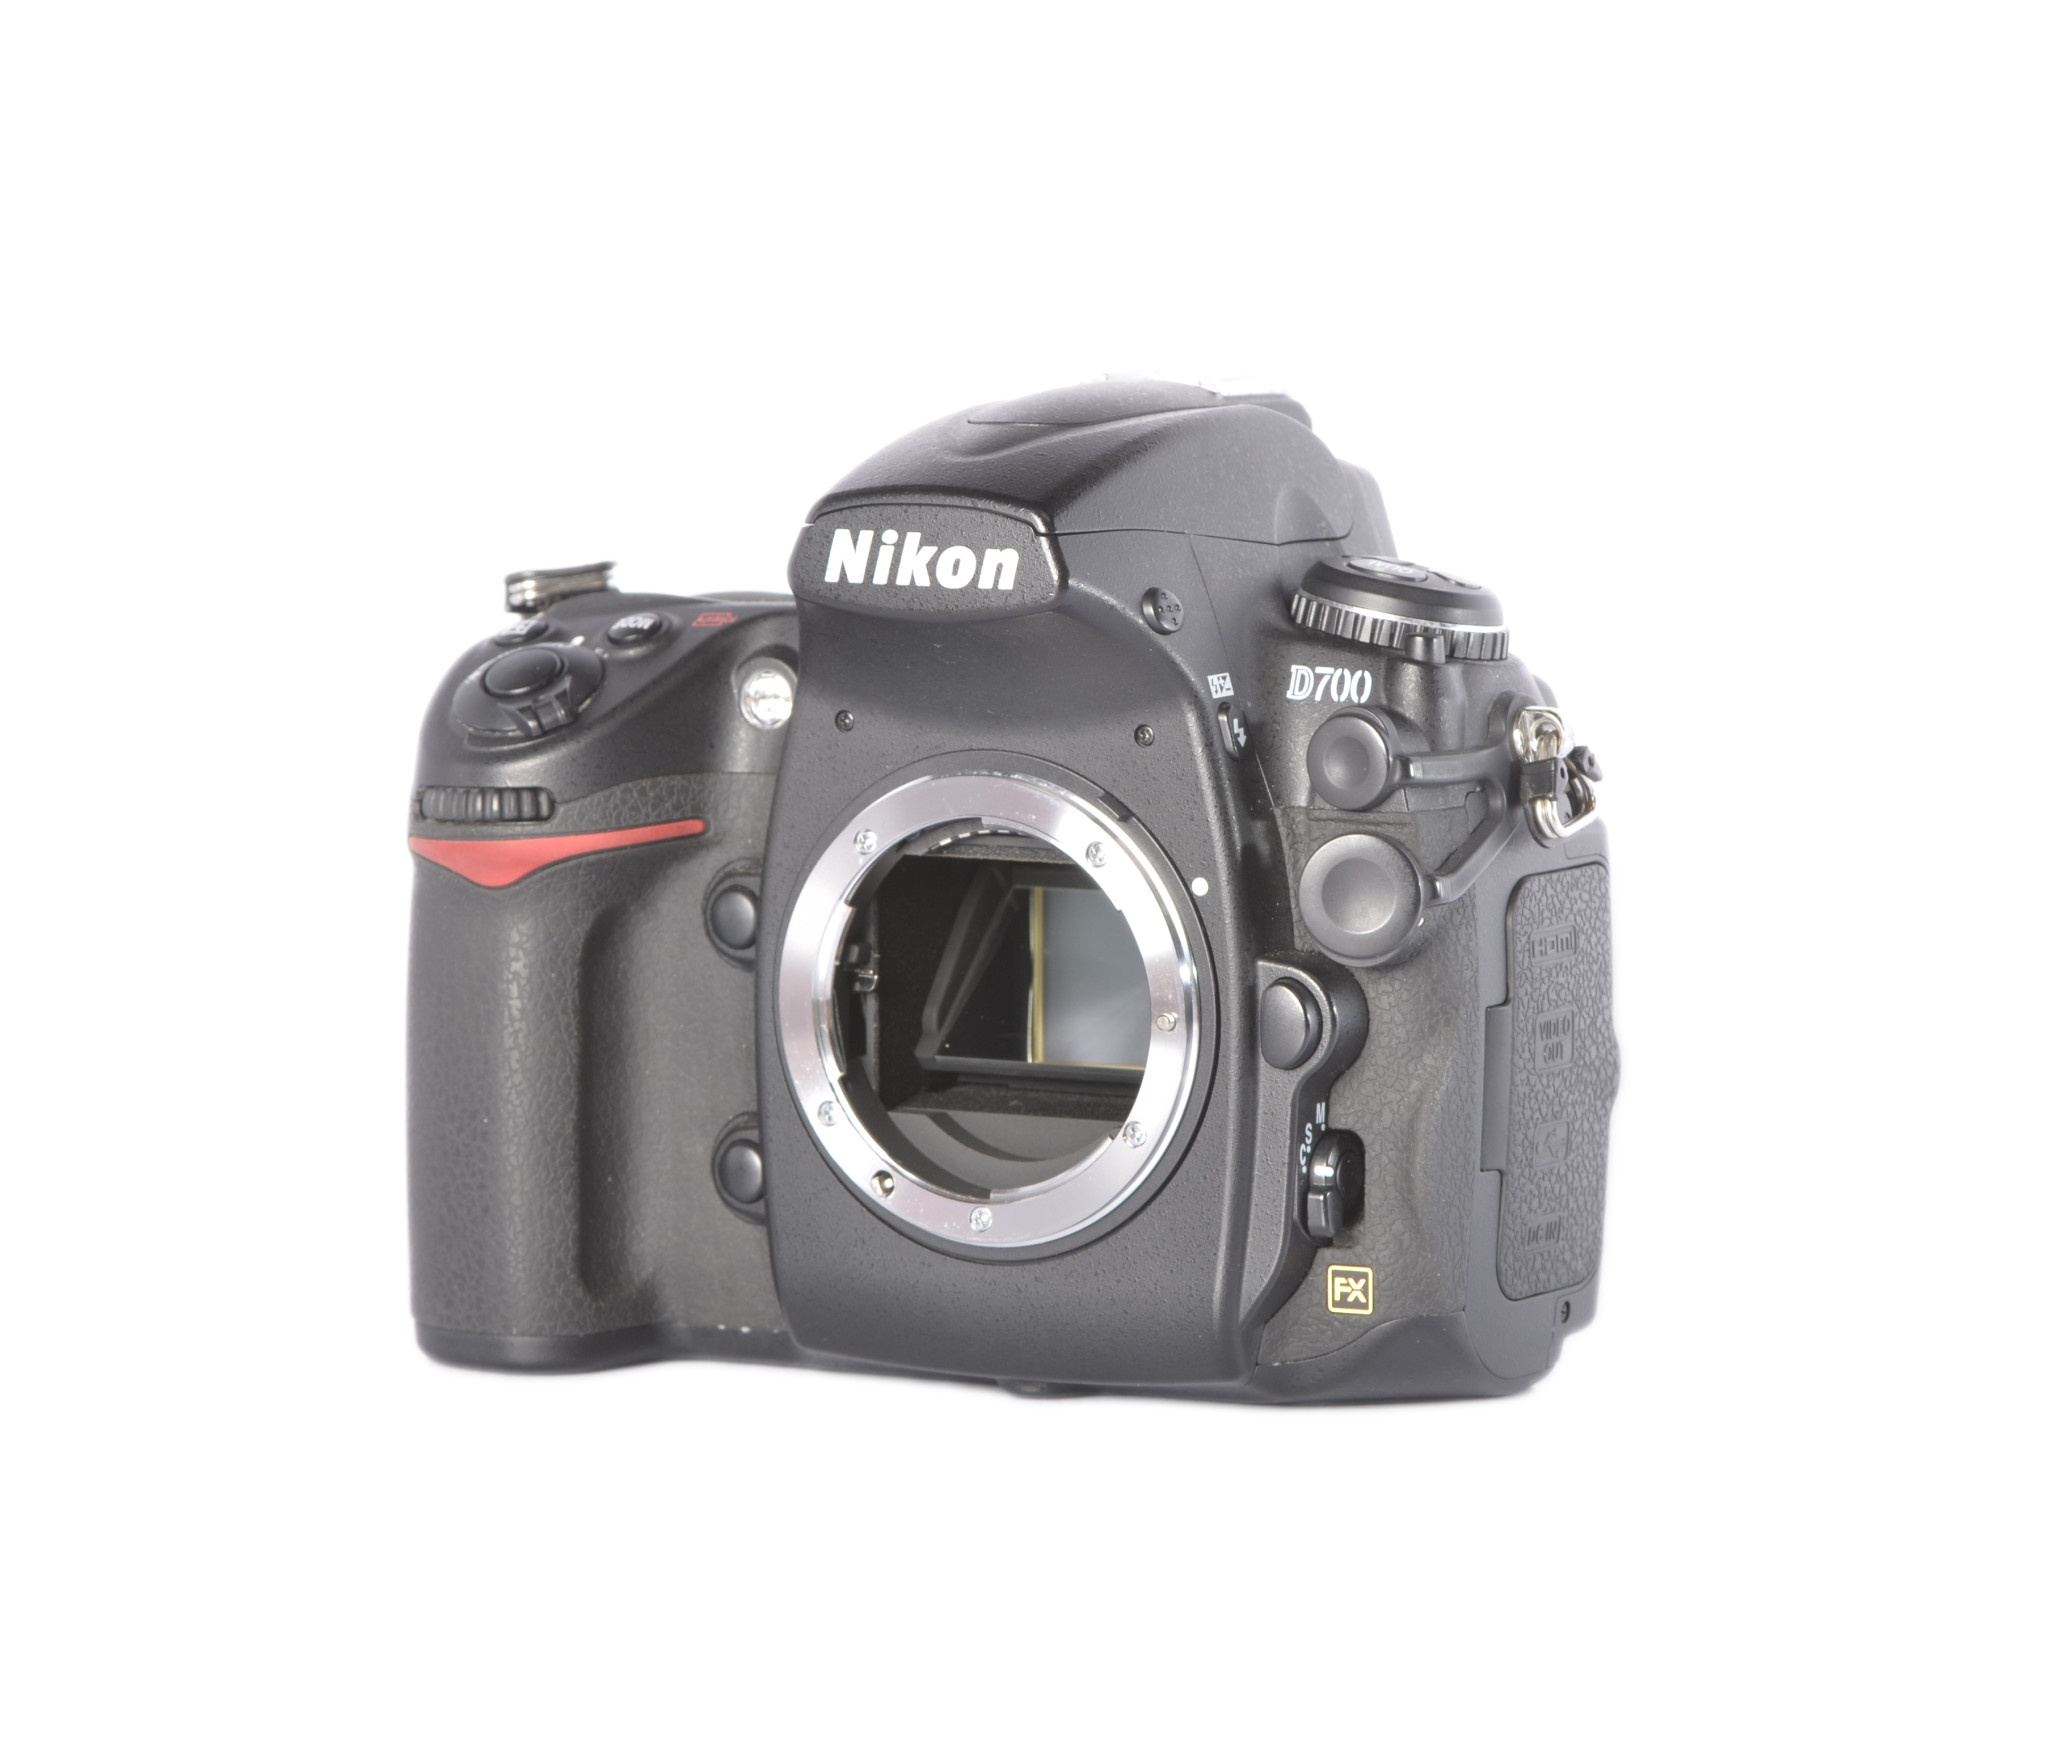 Nikon D700 DSLR Camera (Body Only)